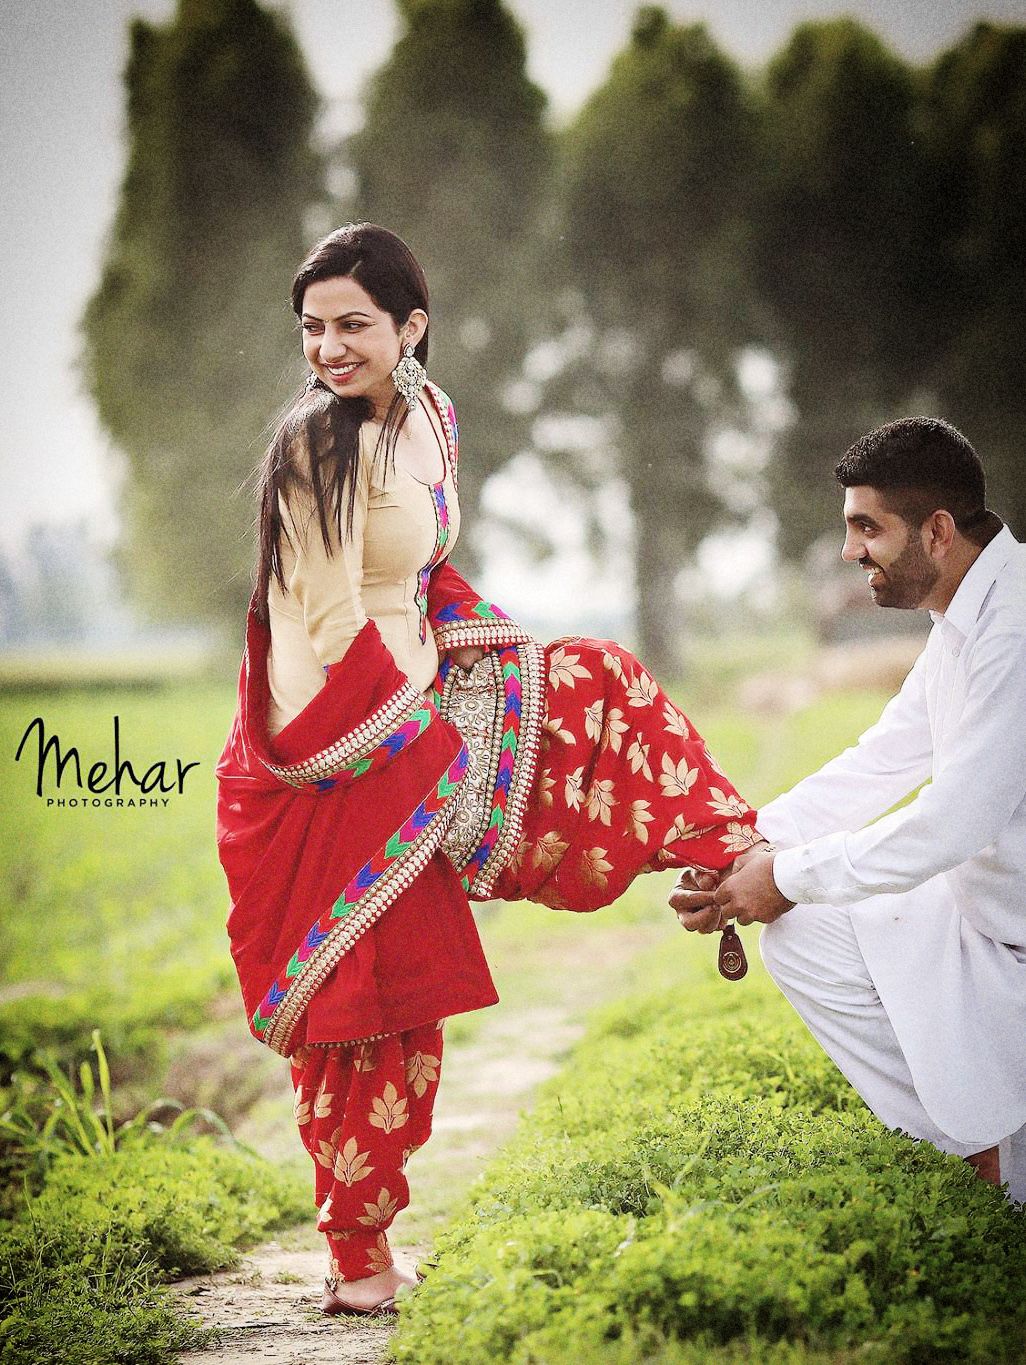 New Punjabi Couples Pic Hd - 1026x1365 Wallpaper 